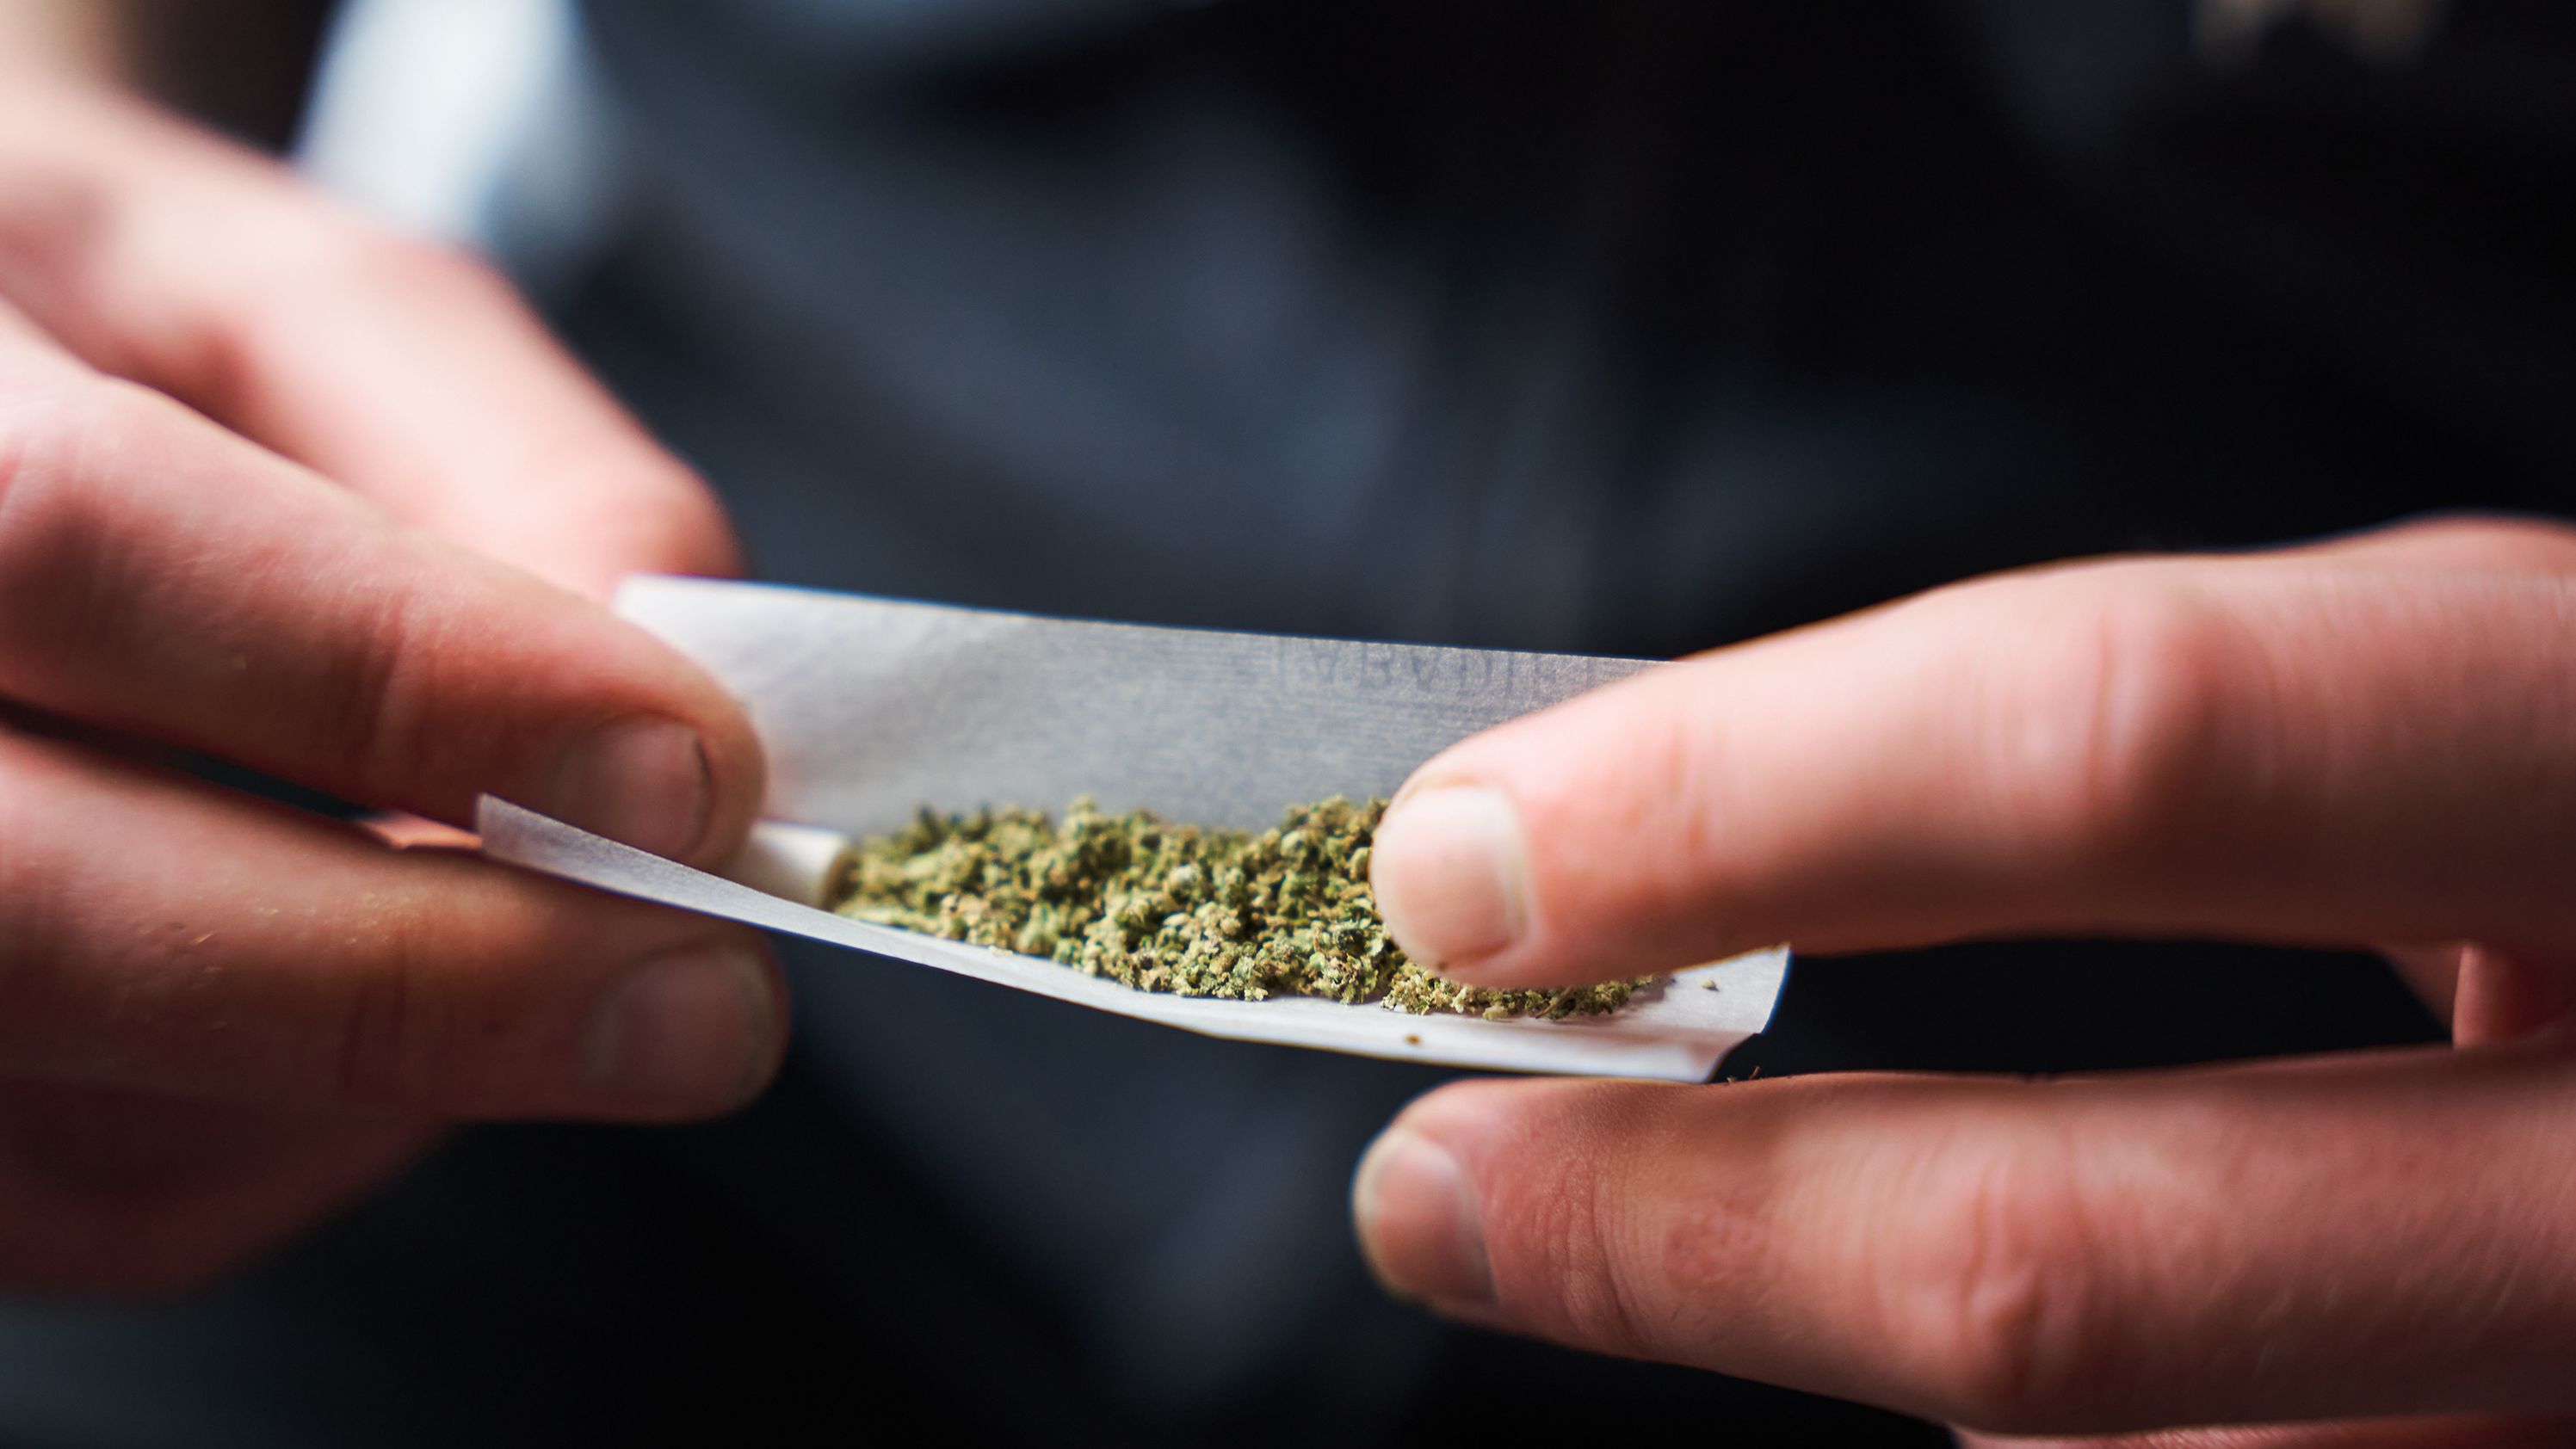 Recreational marijuana use: CNN medical analyst urges caution | CNN